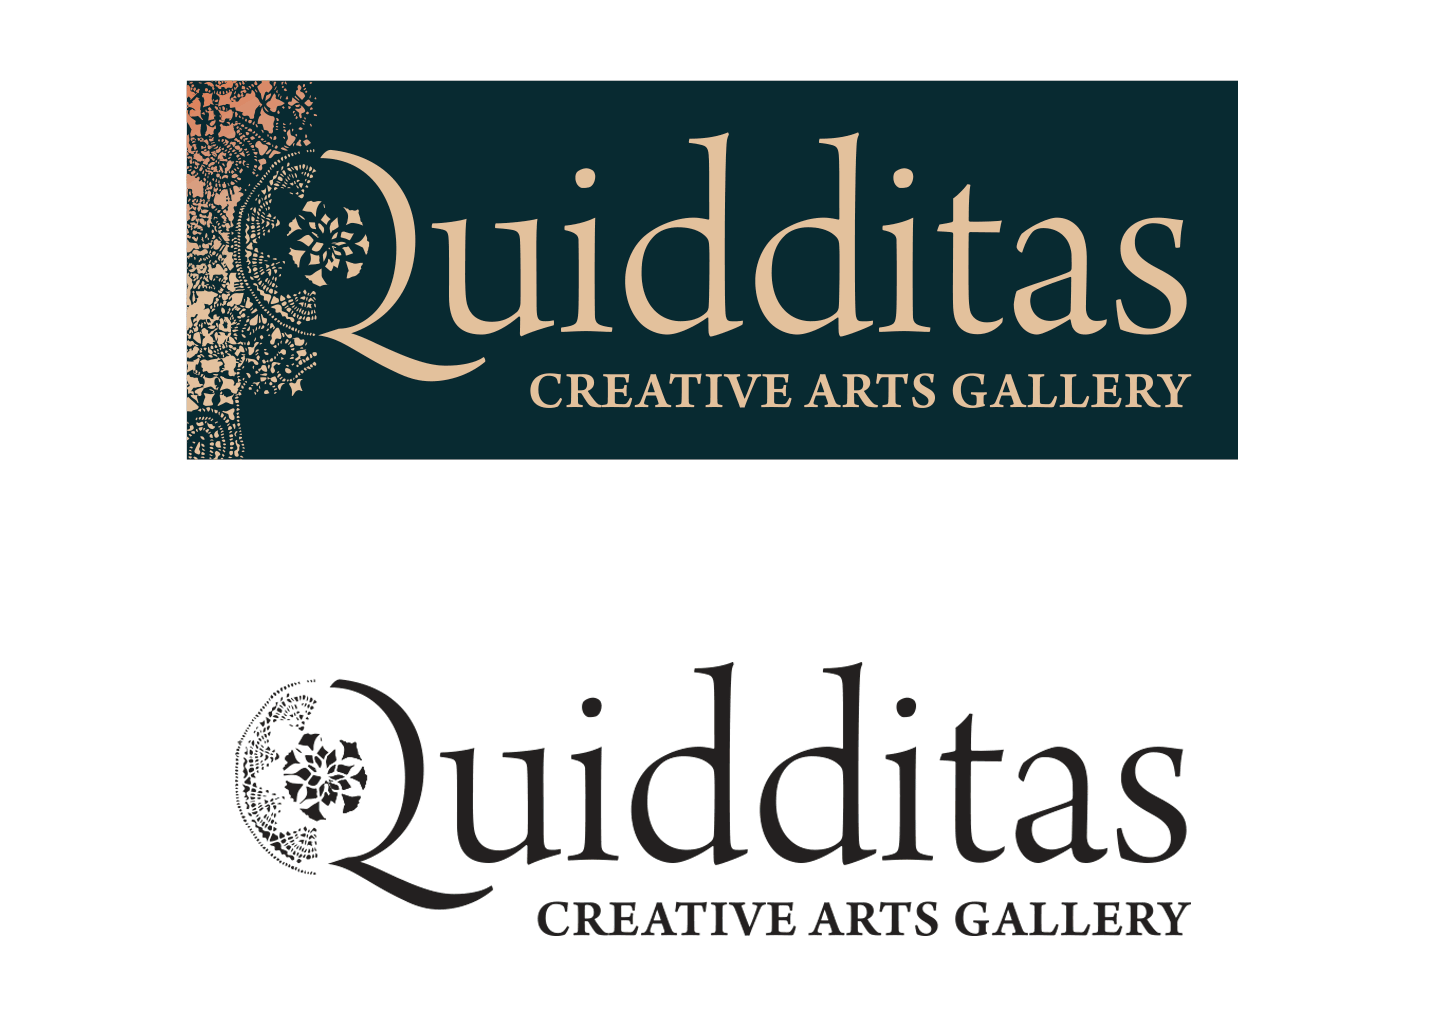 Quidditas Creative Arts Gallery logo